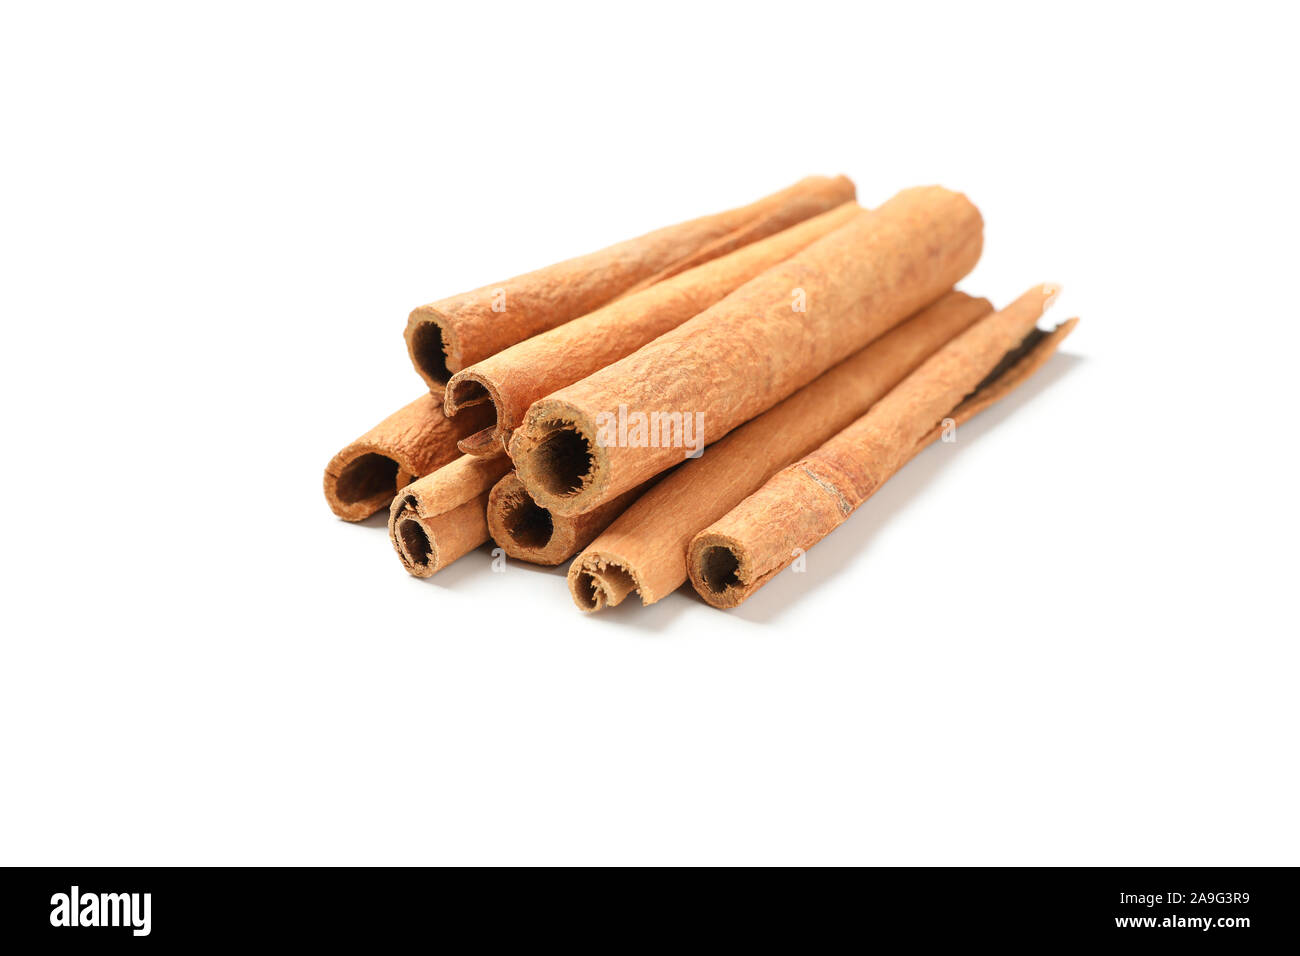 Cinnamon sticks isolated on white background. Sweet spice Stock Photo